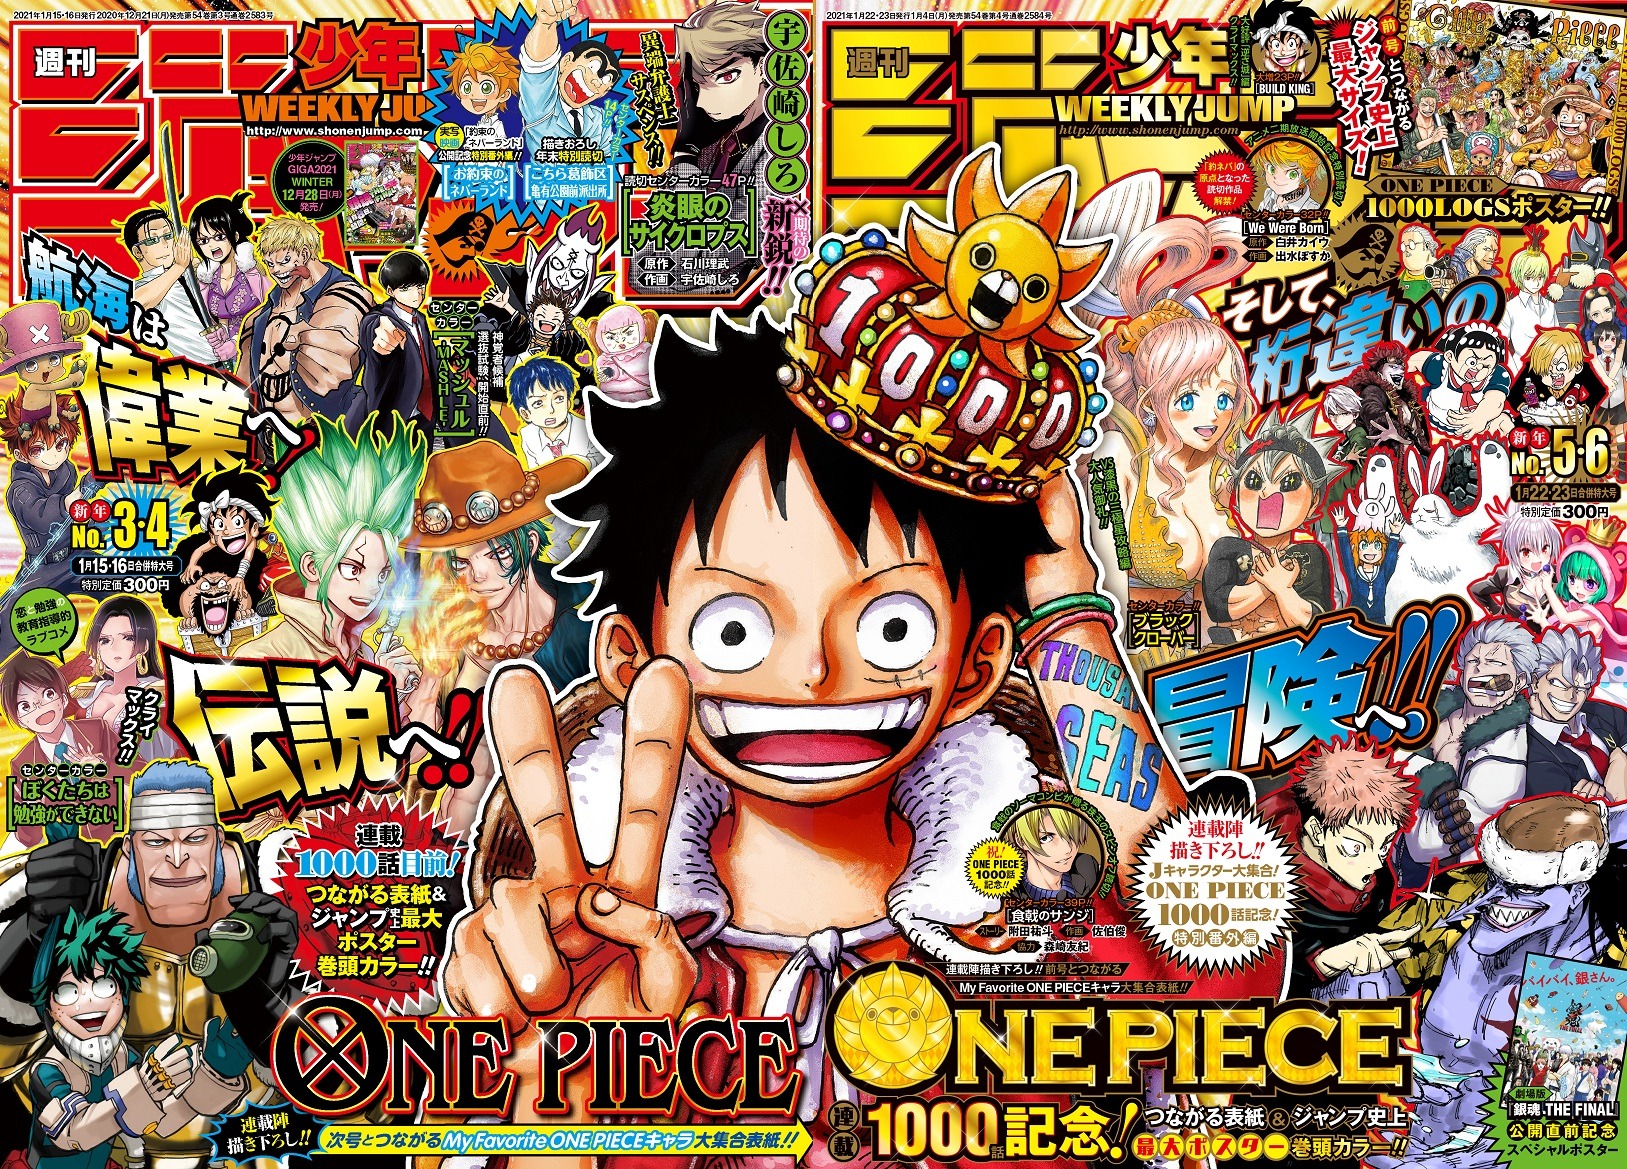 One Piece Episode 1000 Teaser Hypes Series Milestone